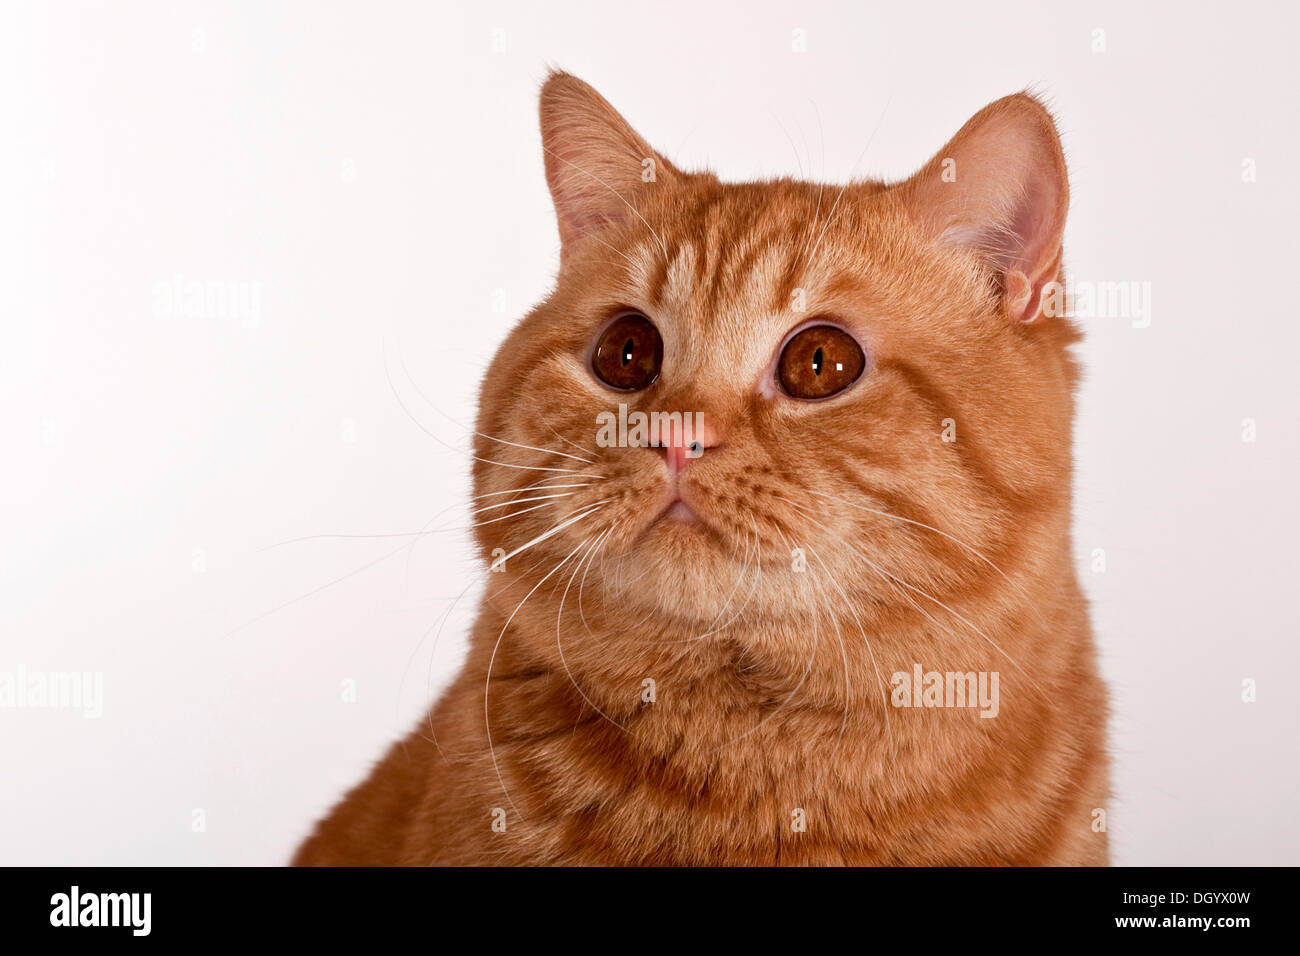 Red British Shorthair cat, studio portrait Stock Photo